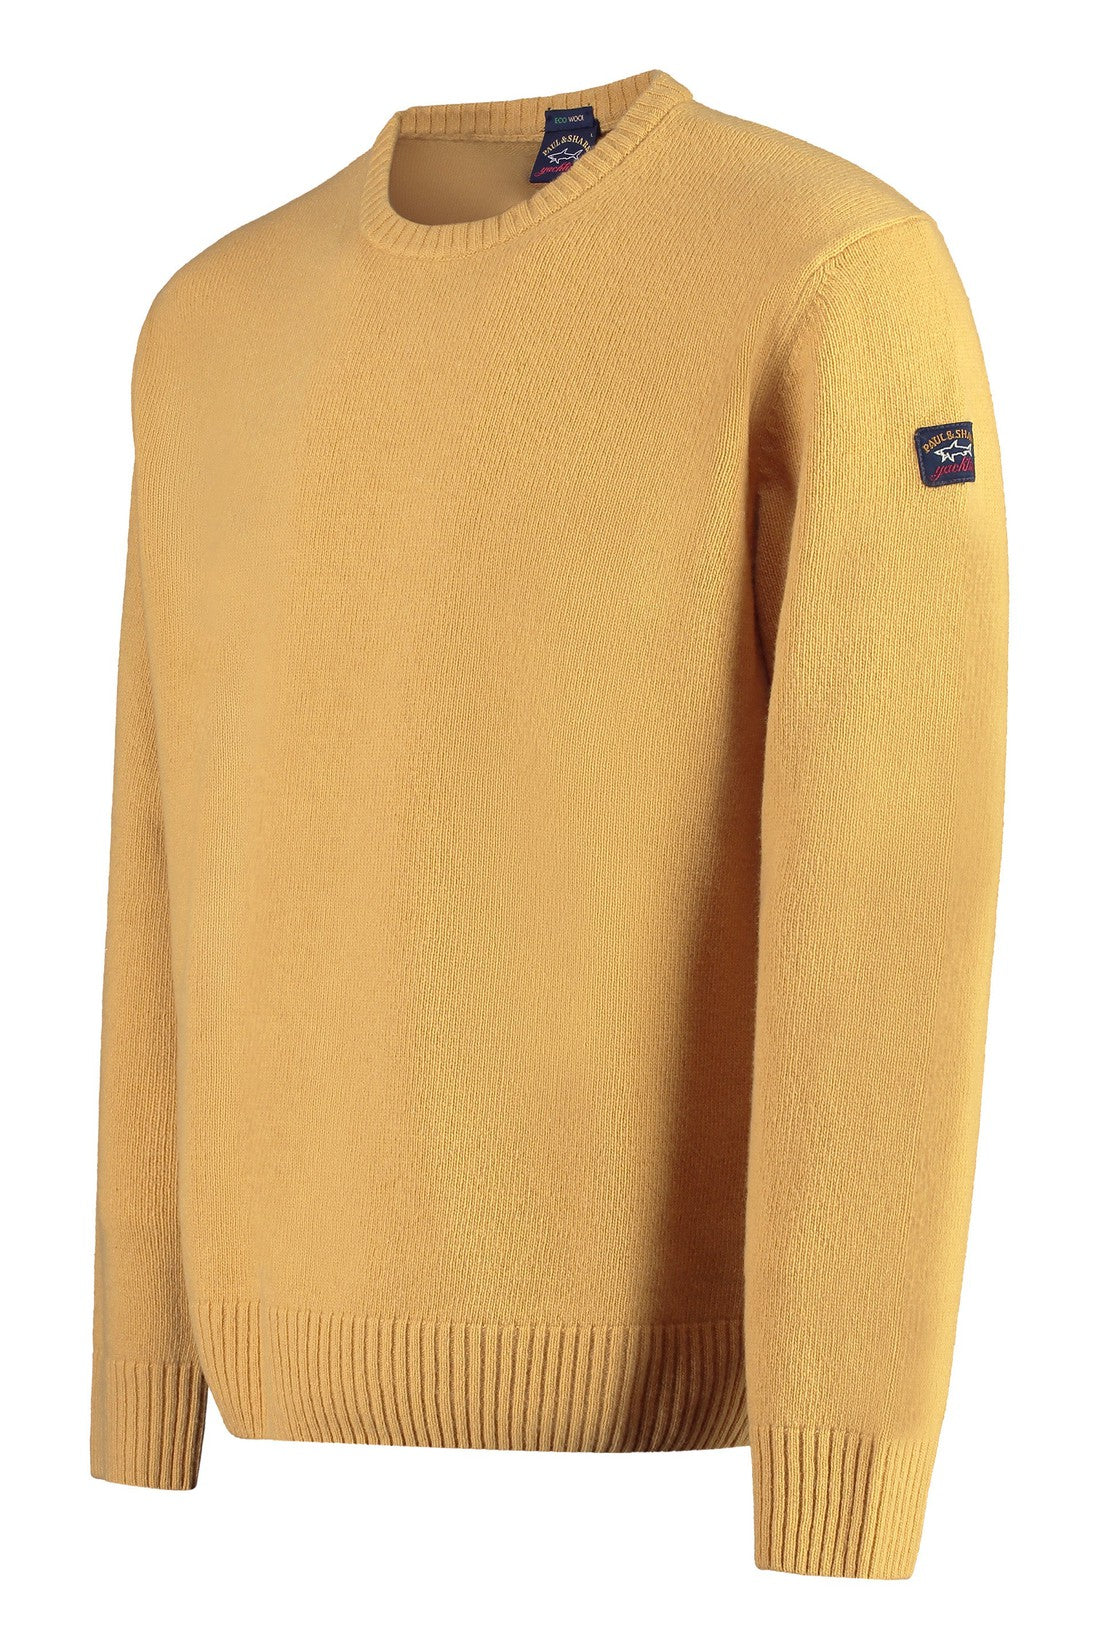 Piralo-OUTLET-SALE-Crew-neck wool sweater-ARCHIVIST